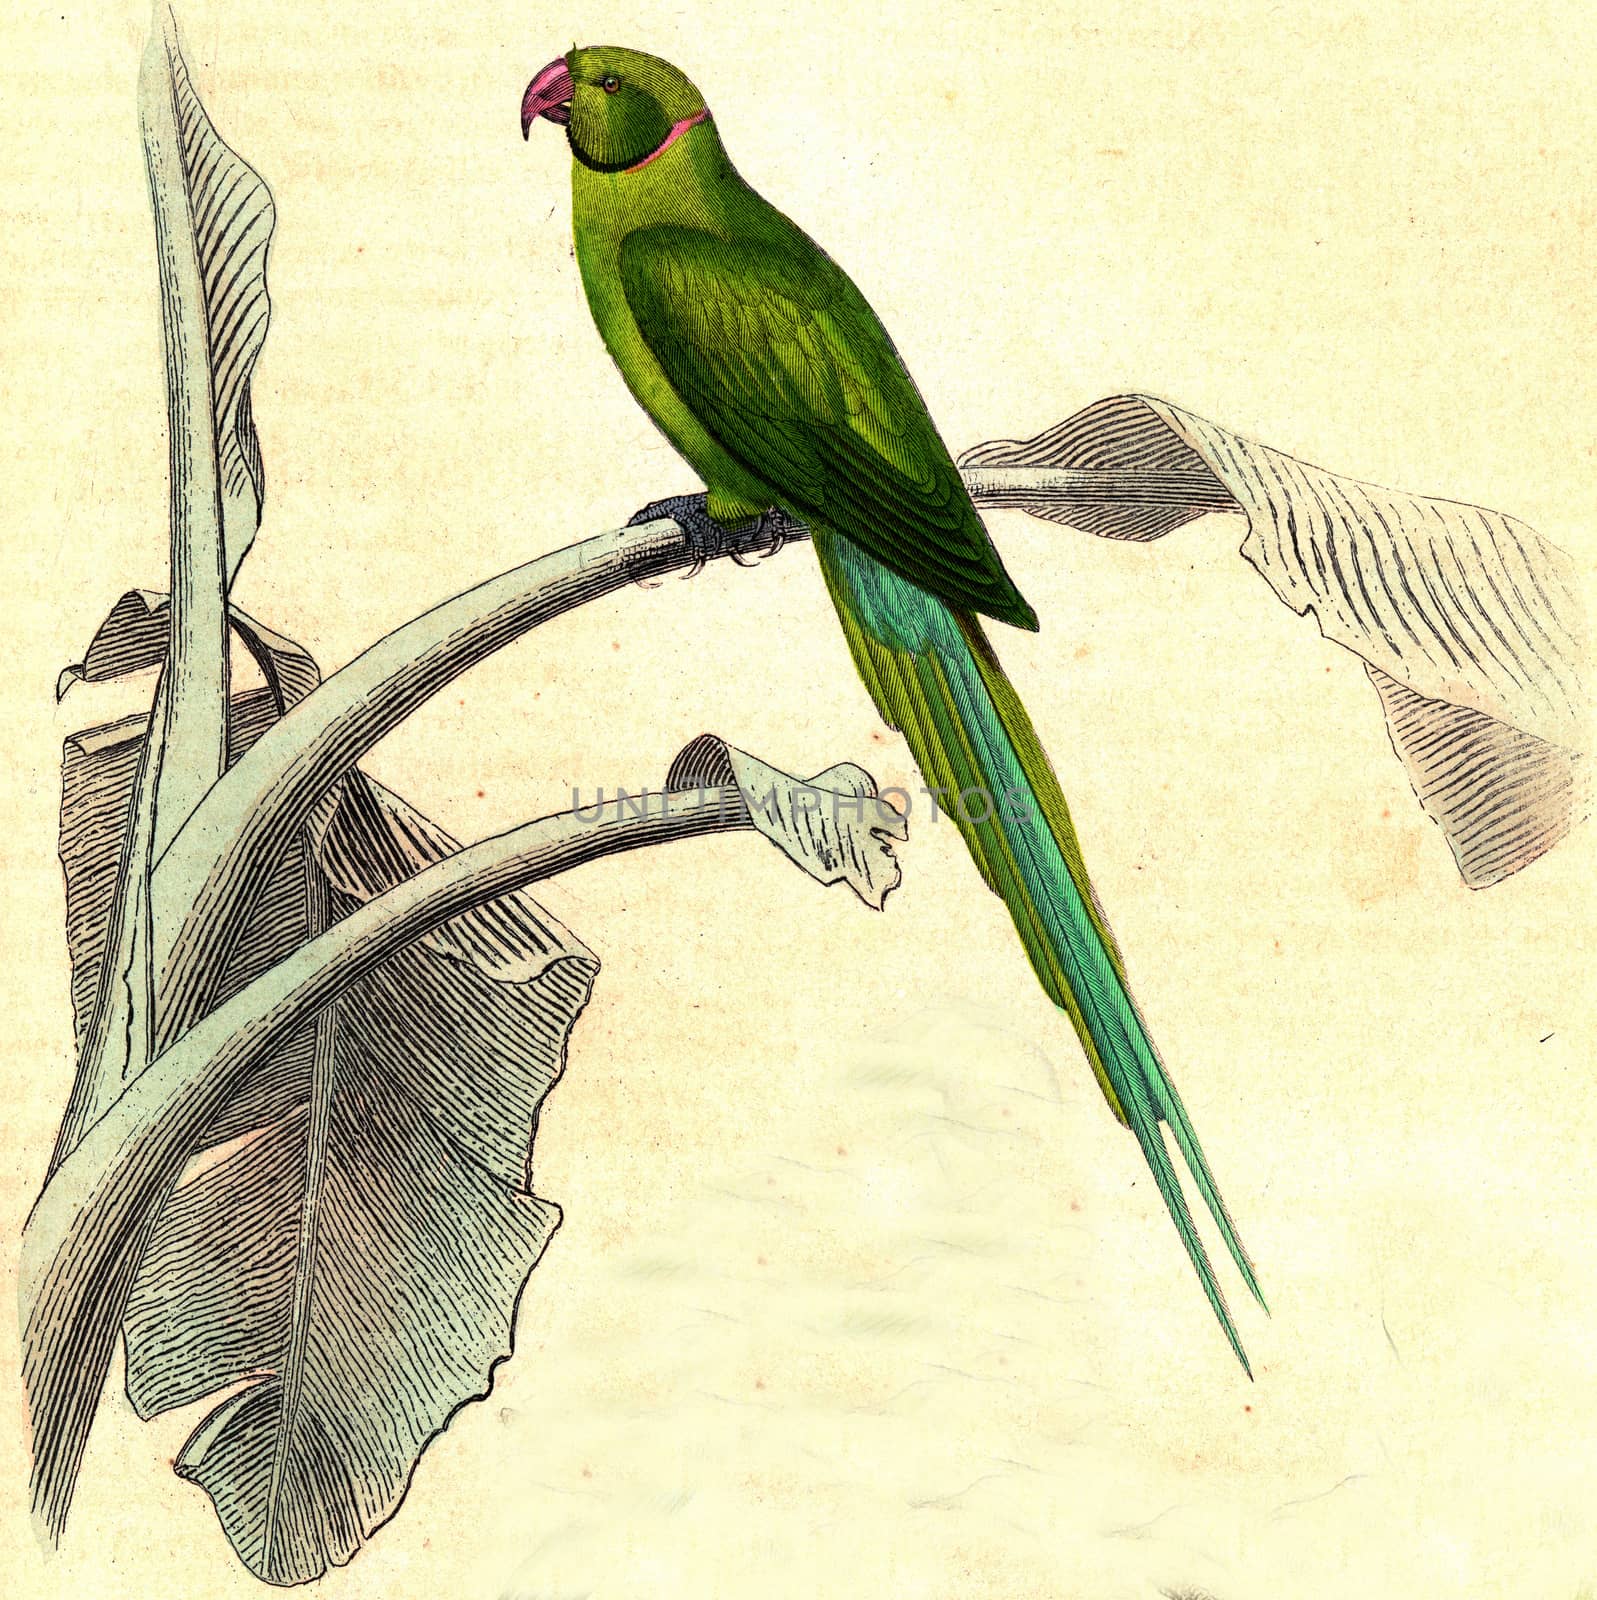 The parakeet has pink collar, vintage engraving. by Morphart